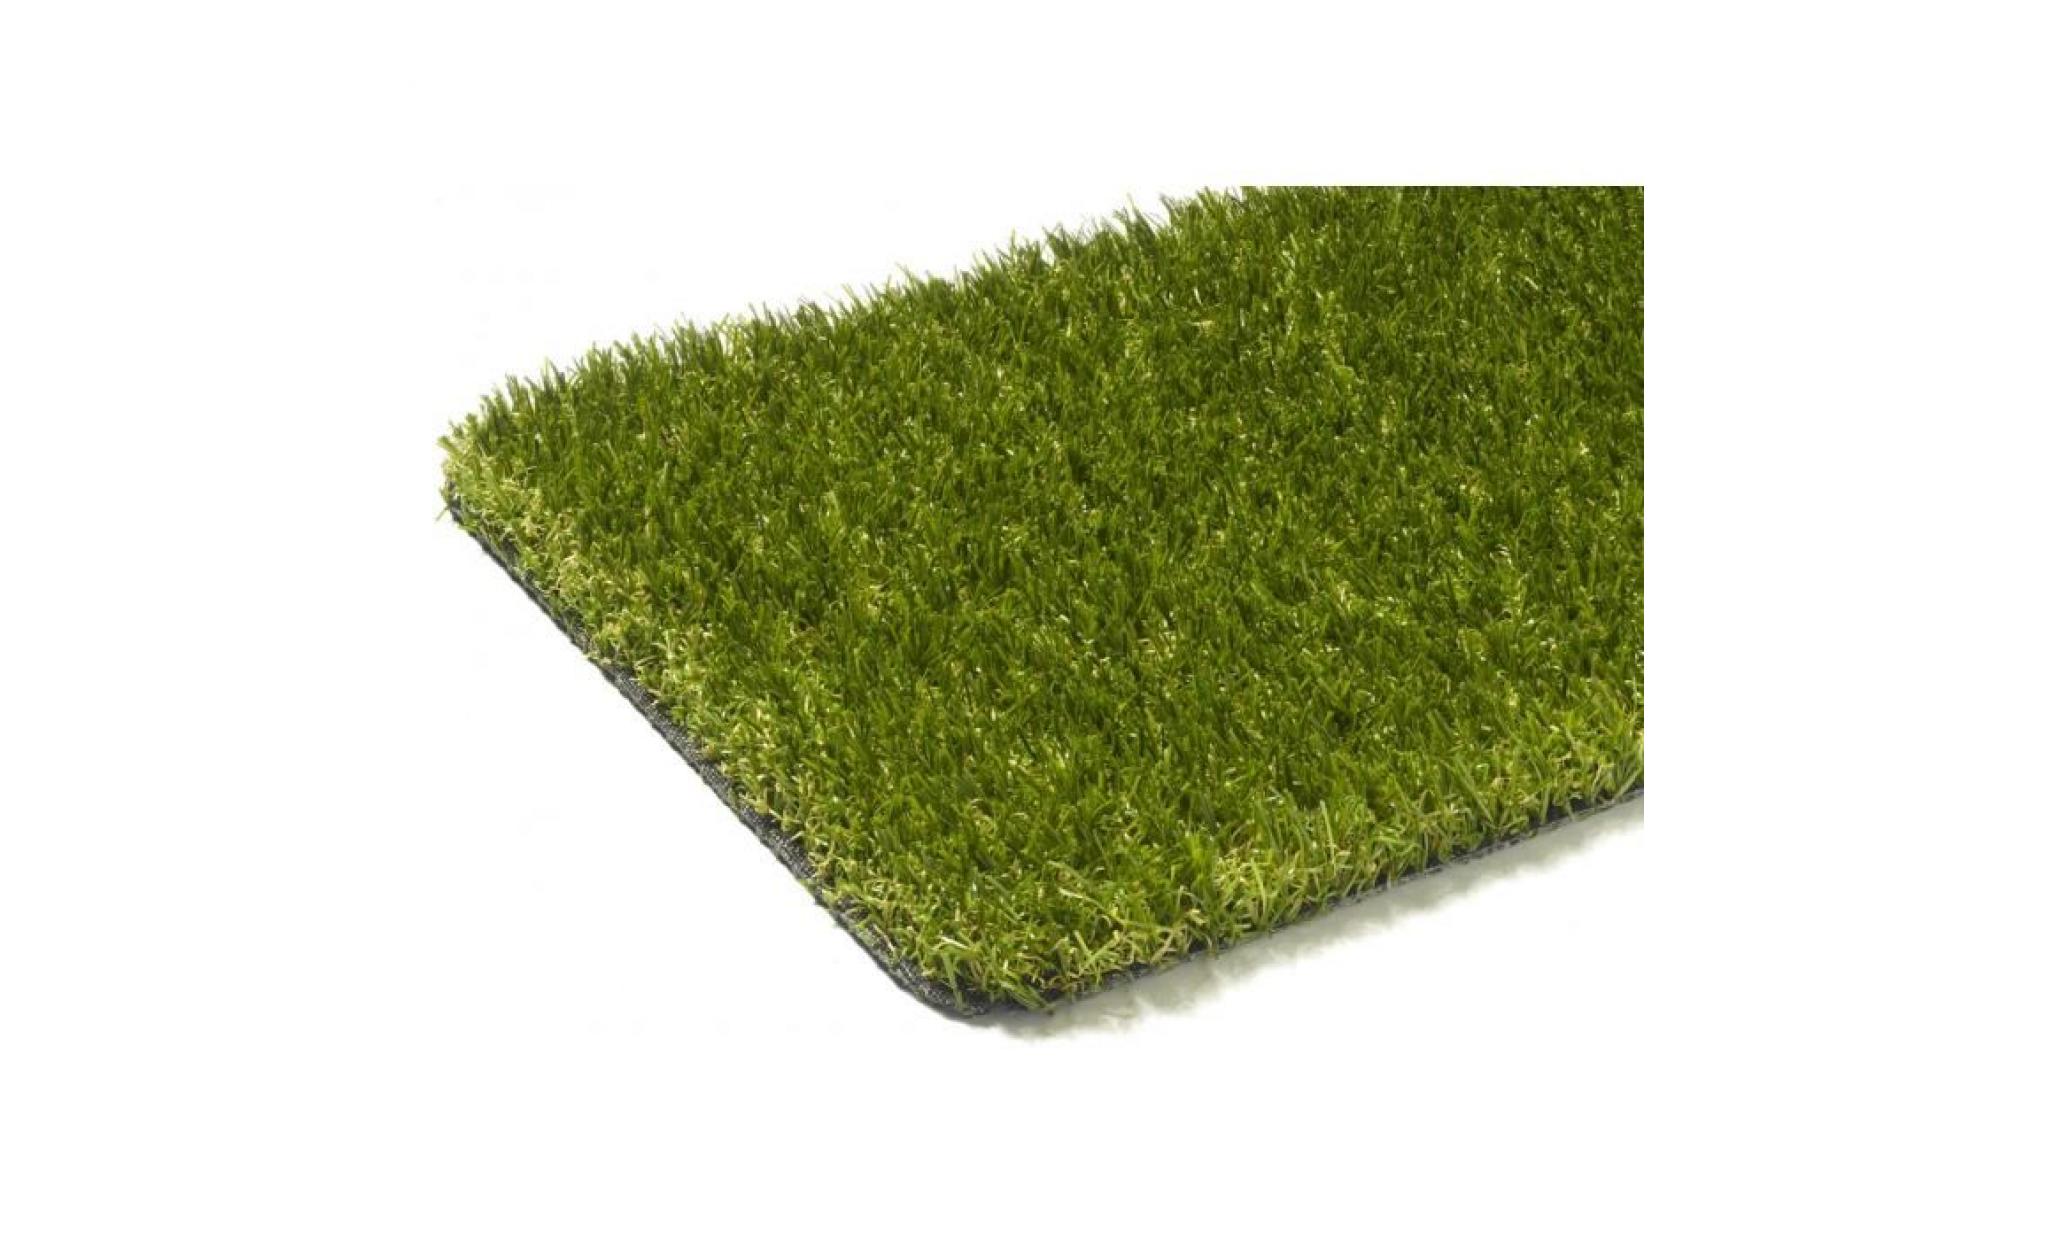 chelsea   tapis type luxe gazon artificiel – pour jardin, terrasse, balcon   vert  [400x50 cm]